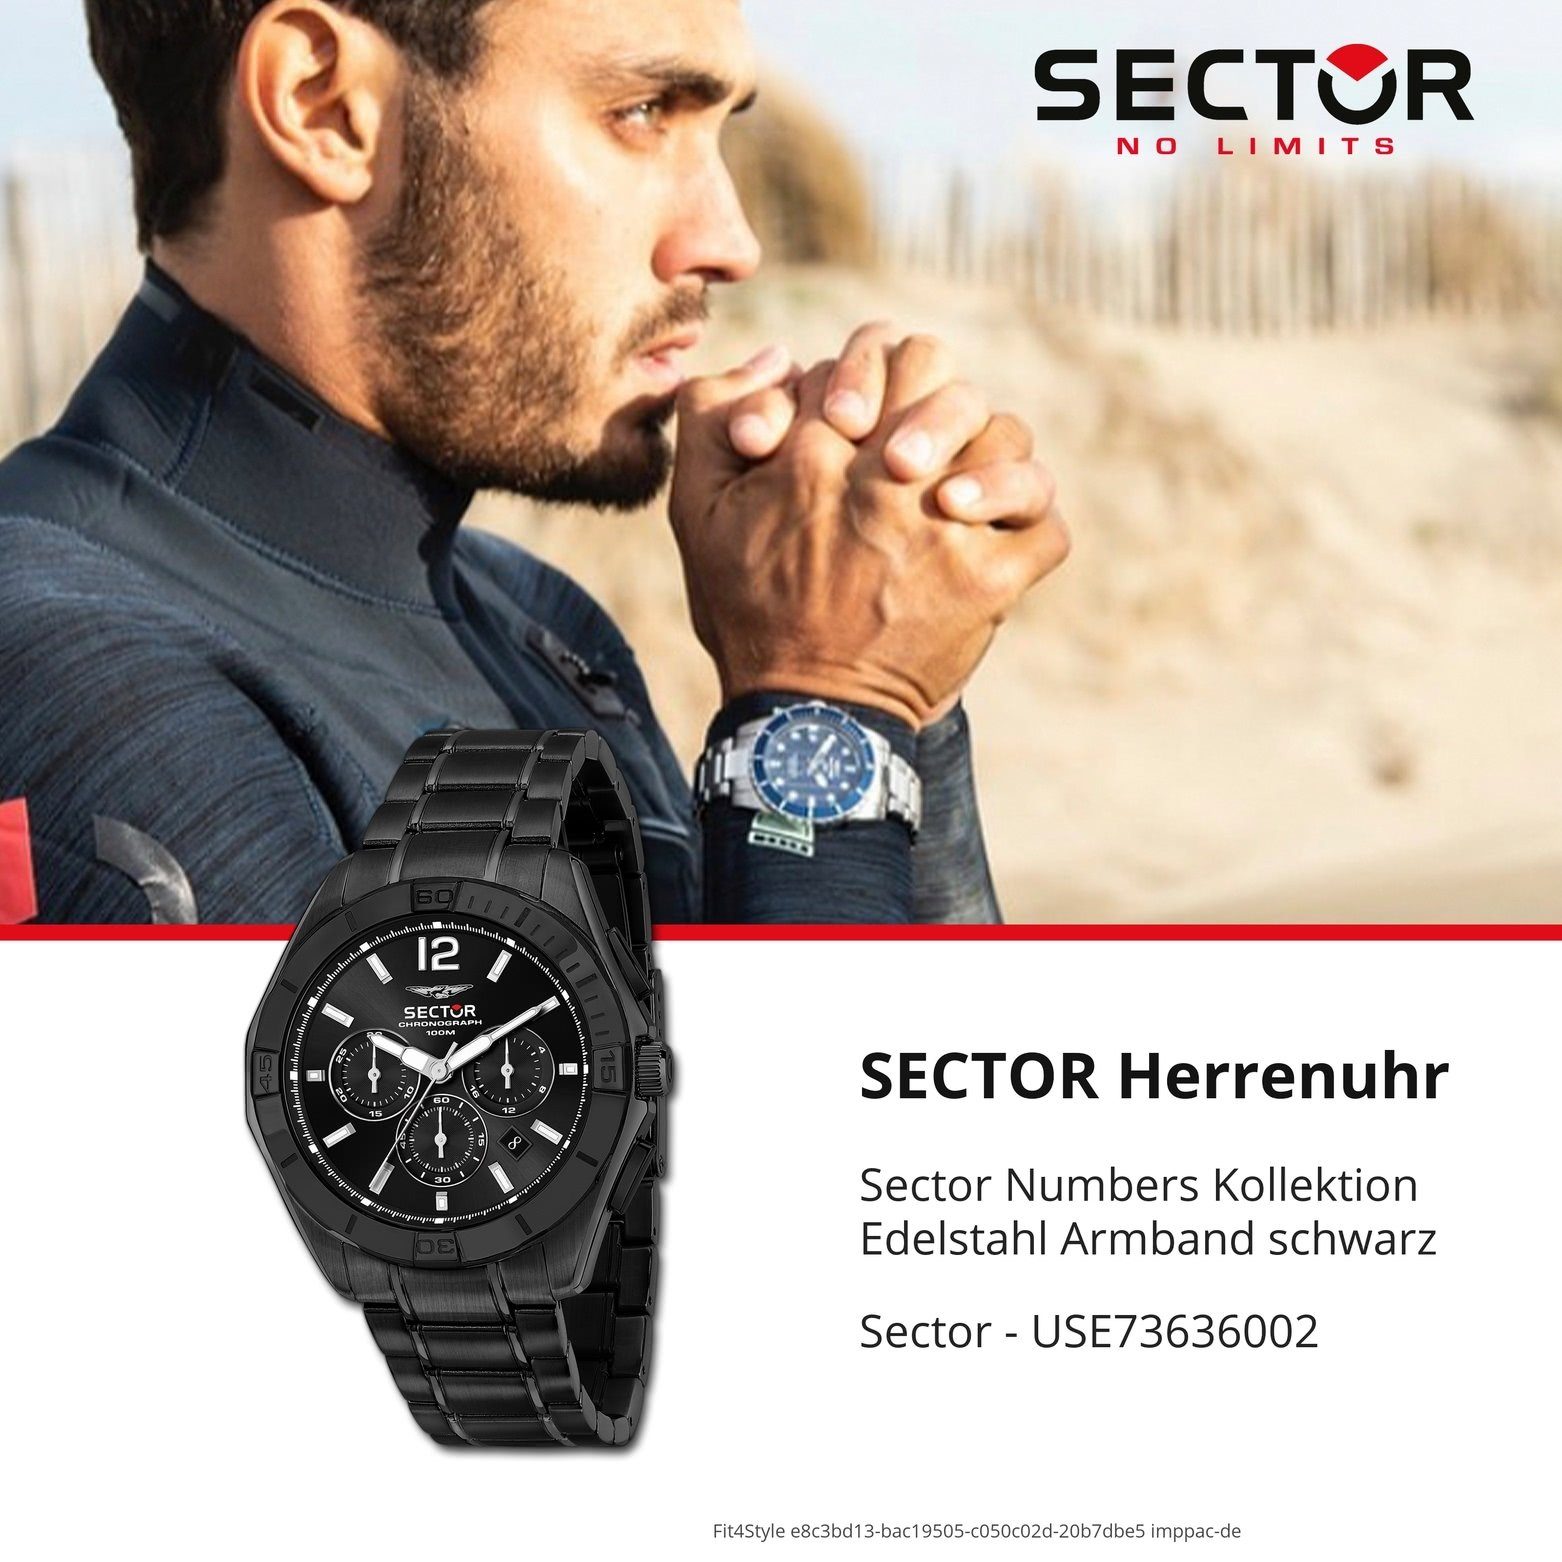 Sector Chronograph rund, schwarz, Edelstahlarmband Chrono, Armbanduhr Herren Sector groß Fashion (48mm) Armbanduhr Herren